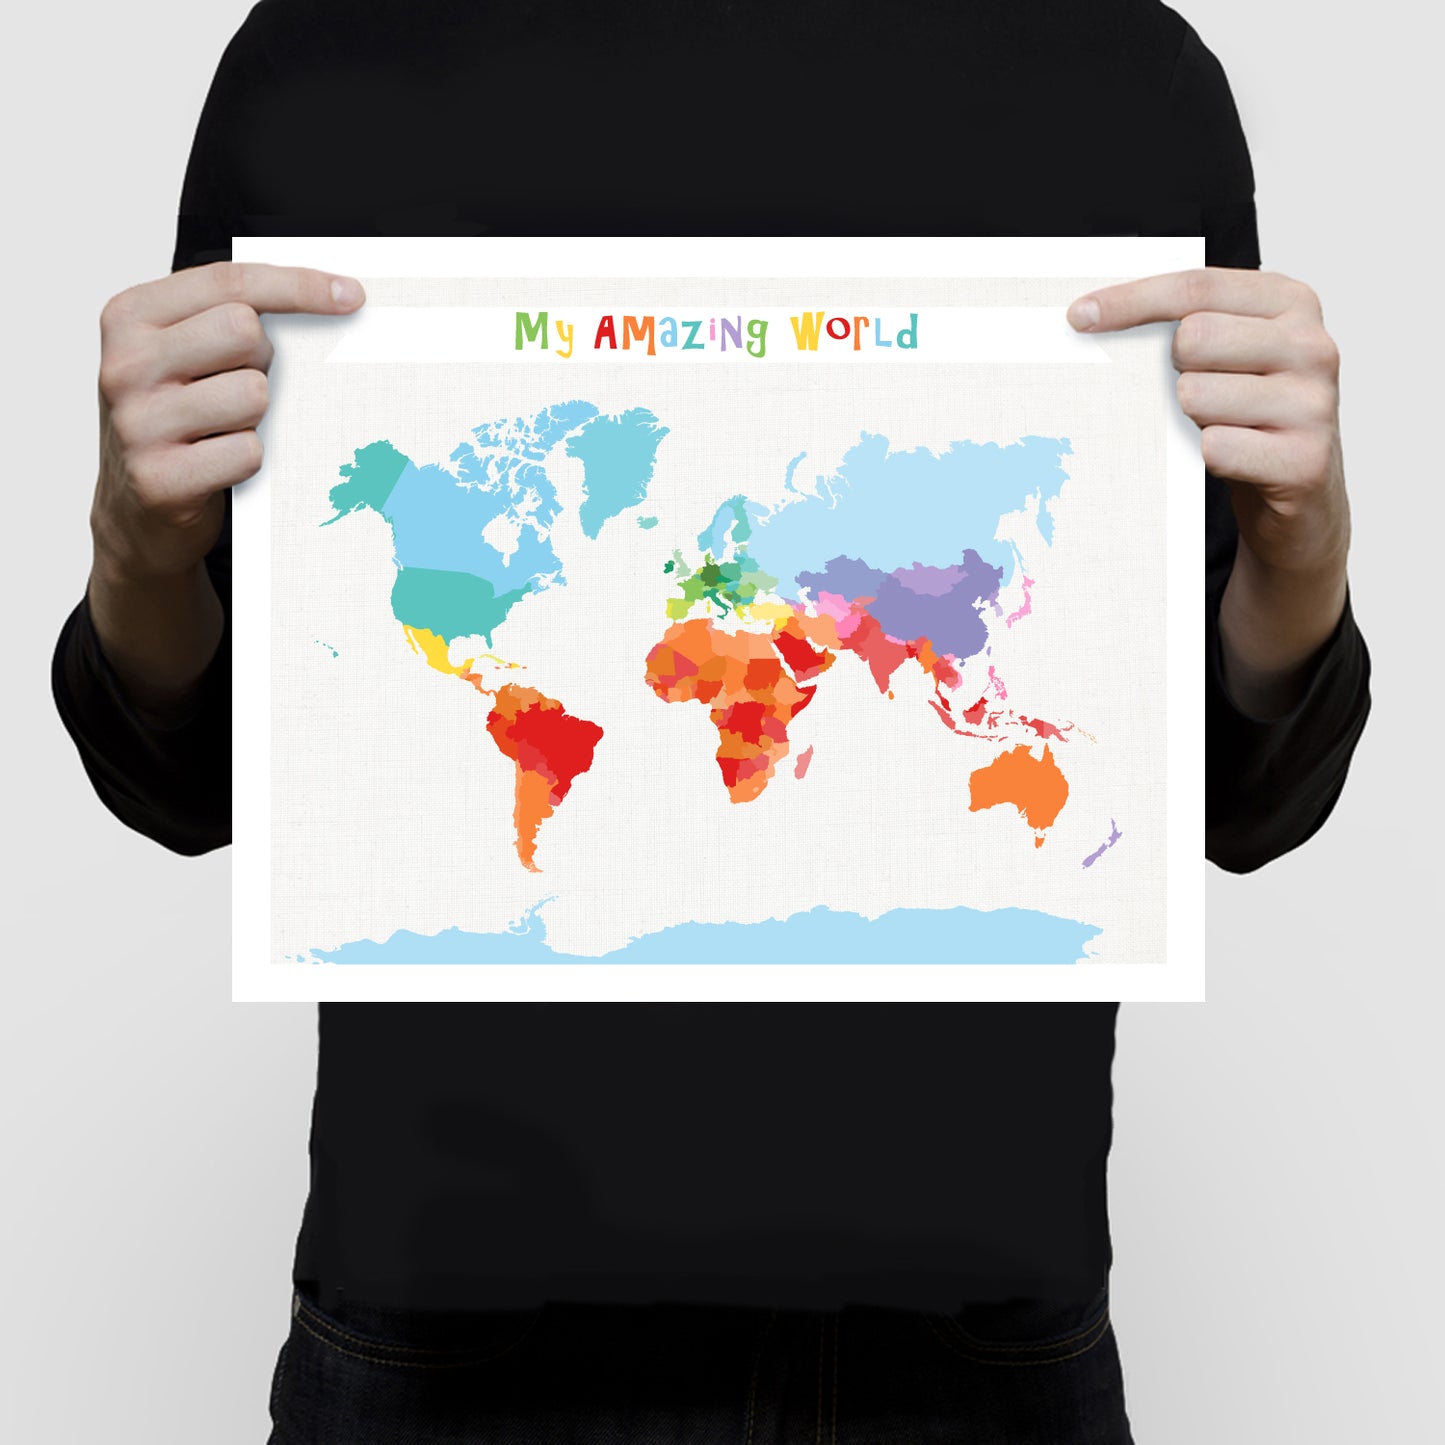 My amazing world map print